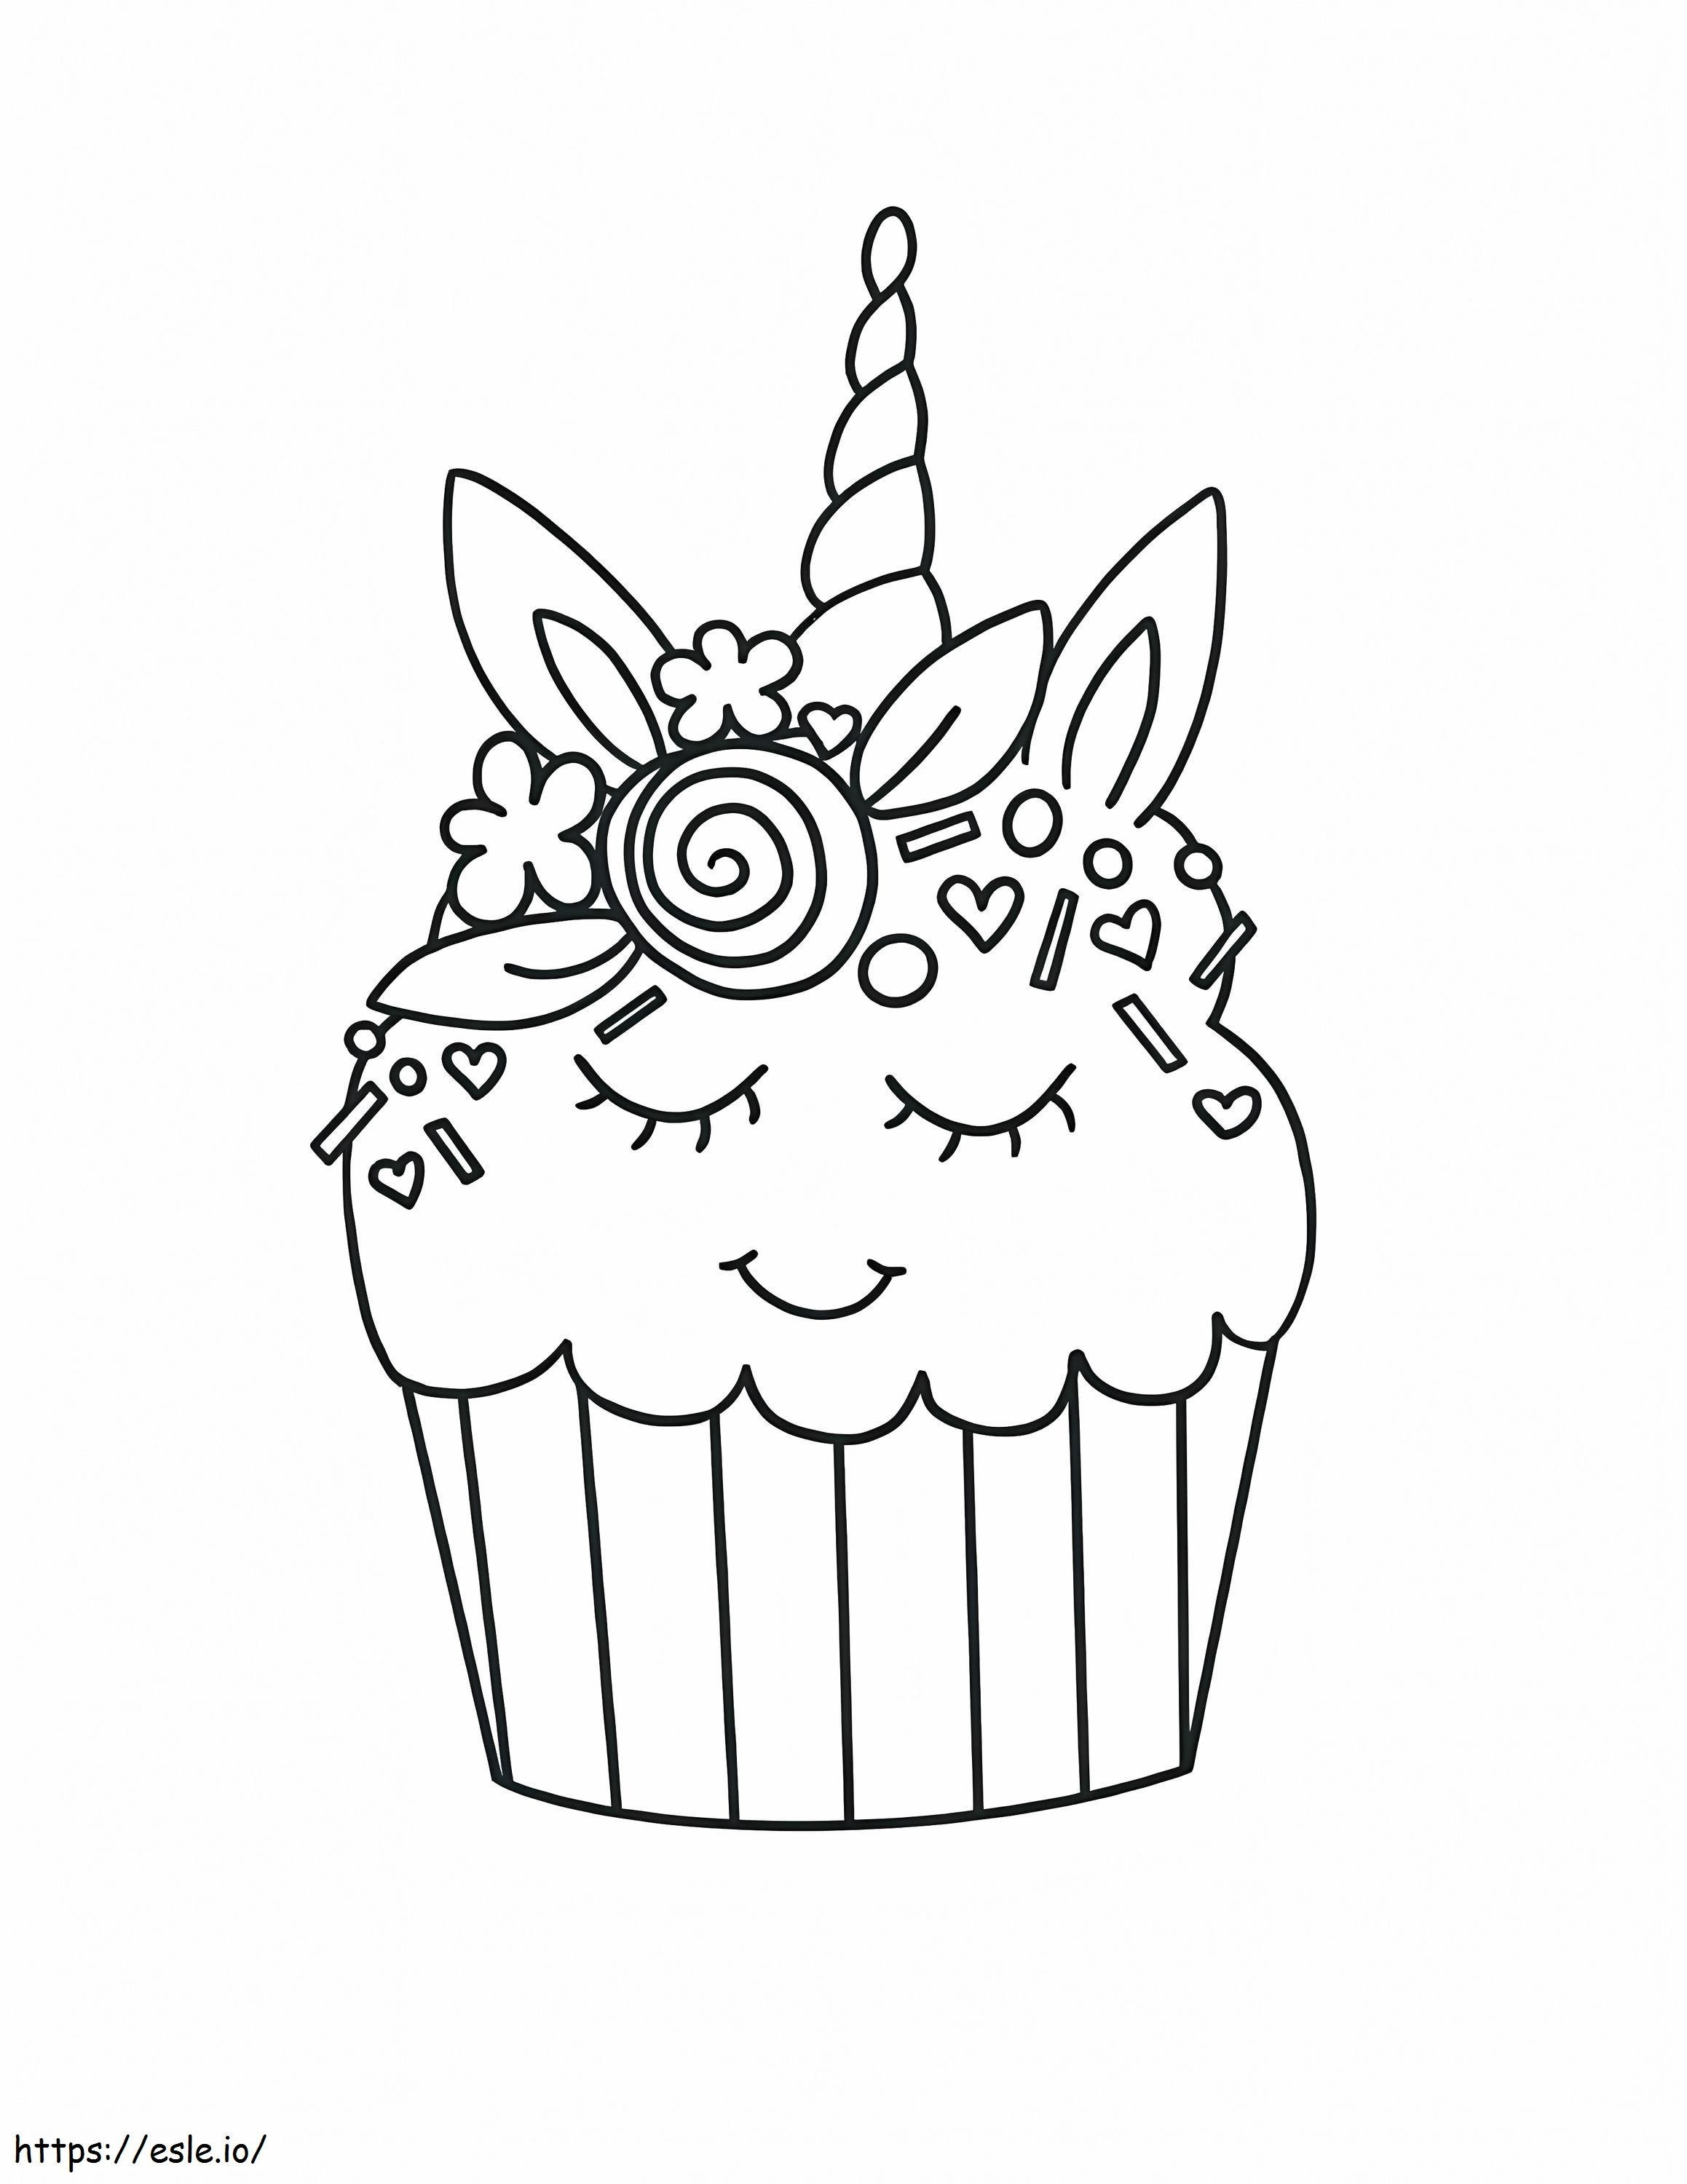 Cupcake Unicornio Sonriente para colorear